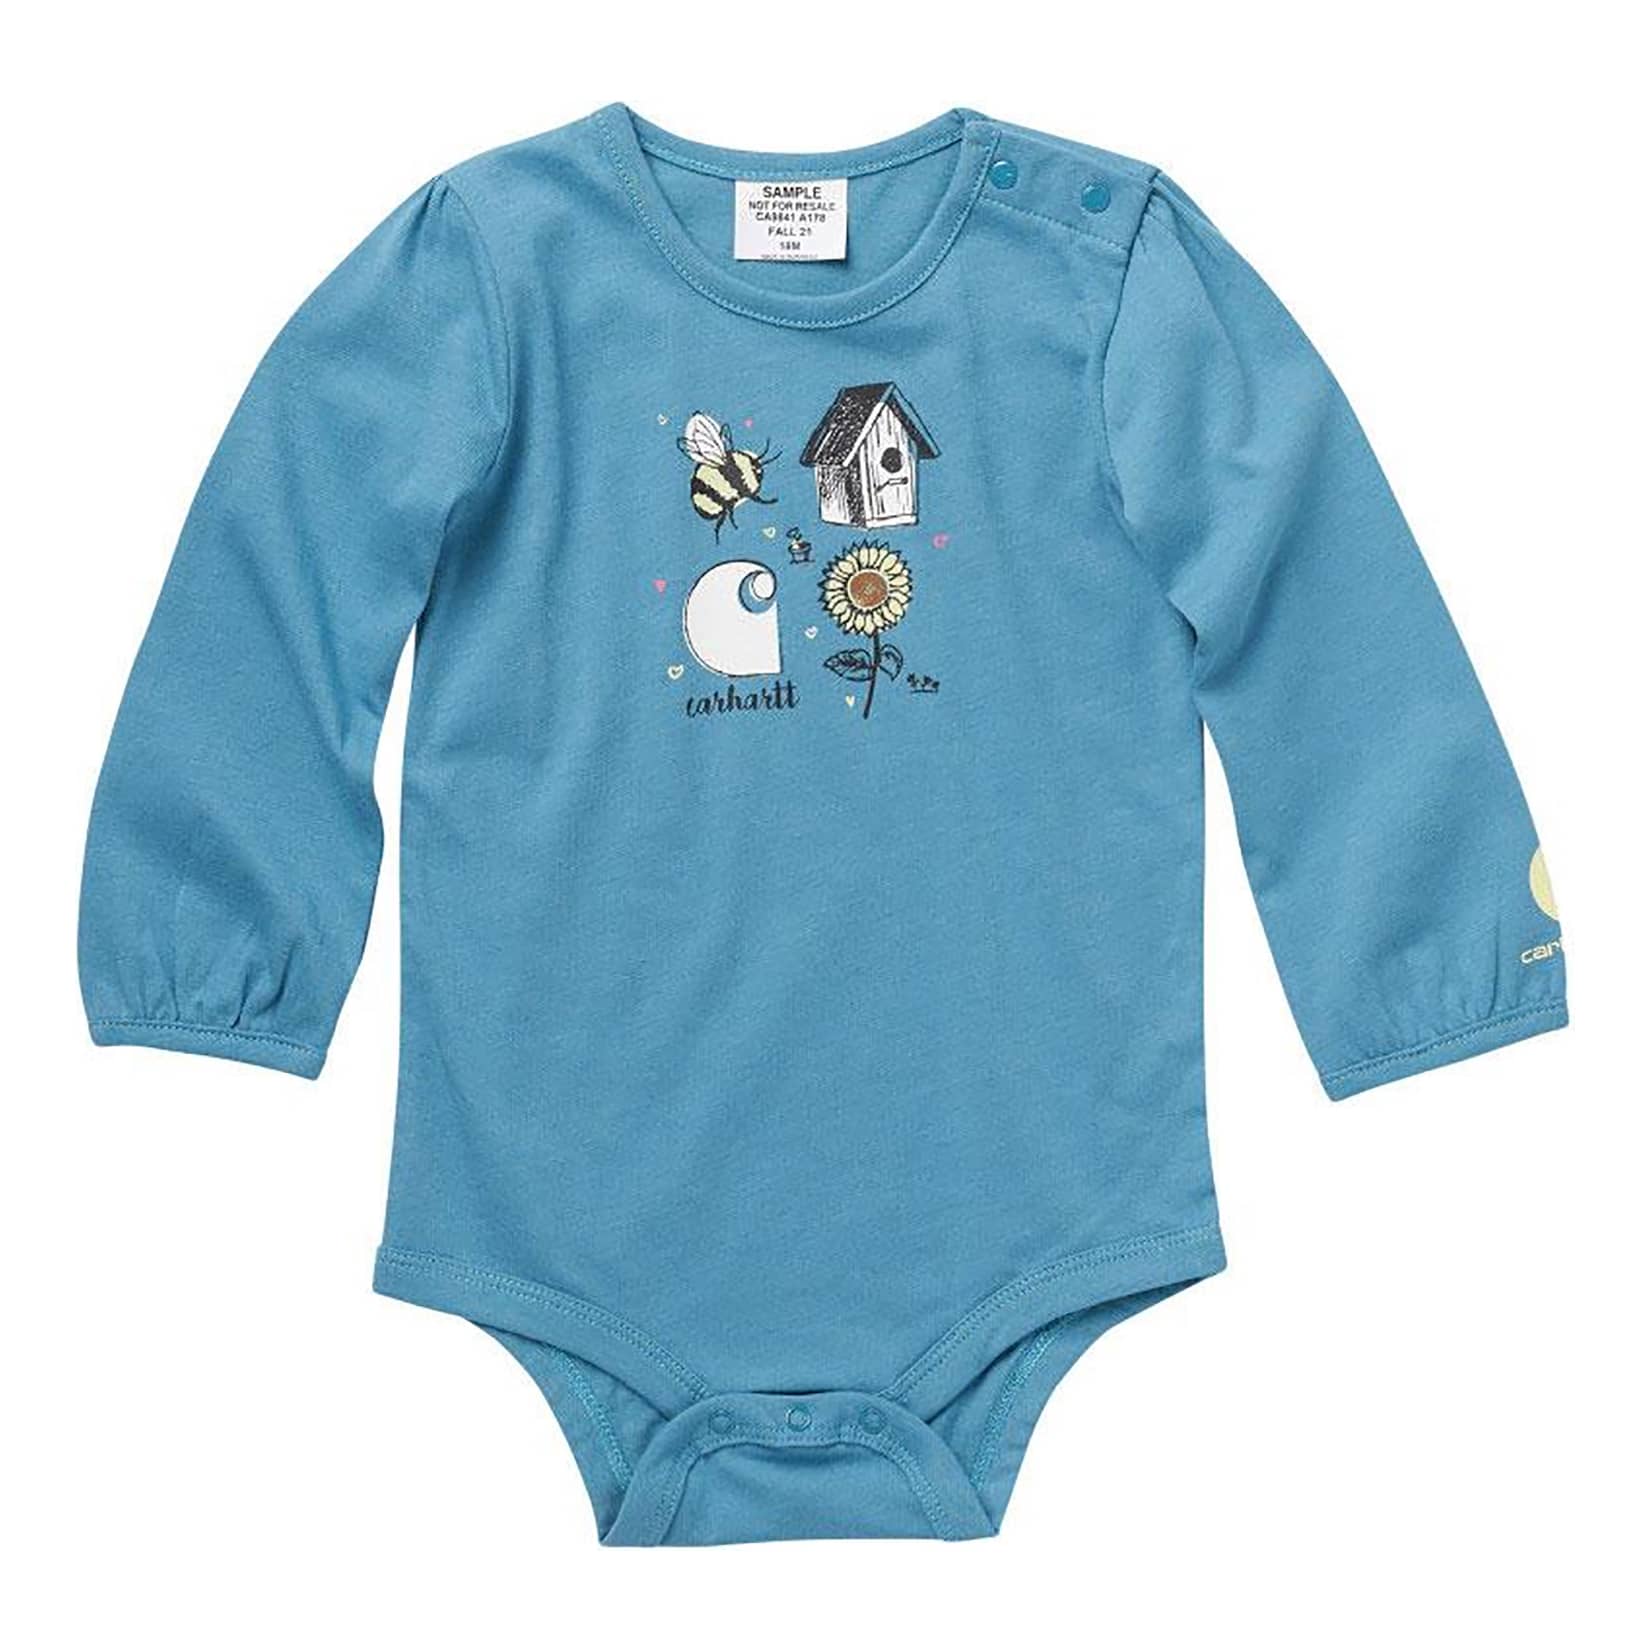 Carhartt® Infants’ Long-Sleeve Graphic Bodysuit - Turquoise/Aqua